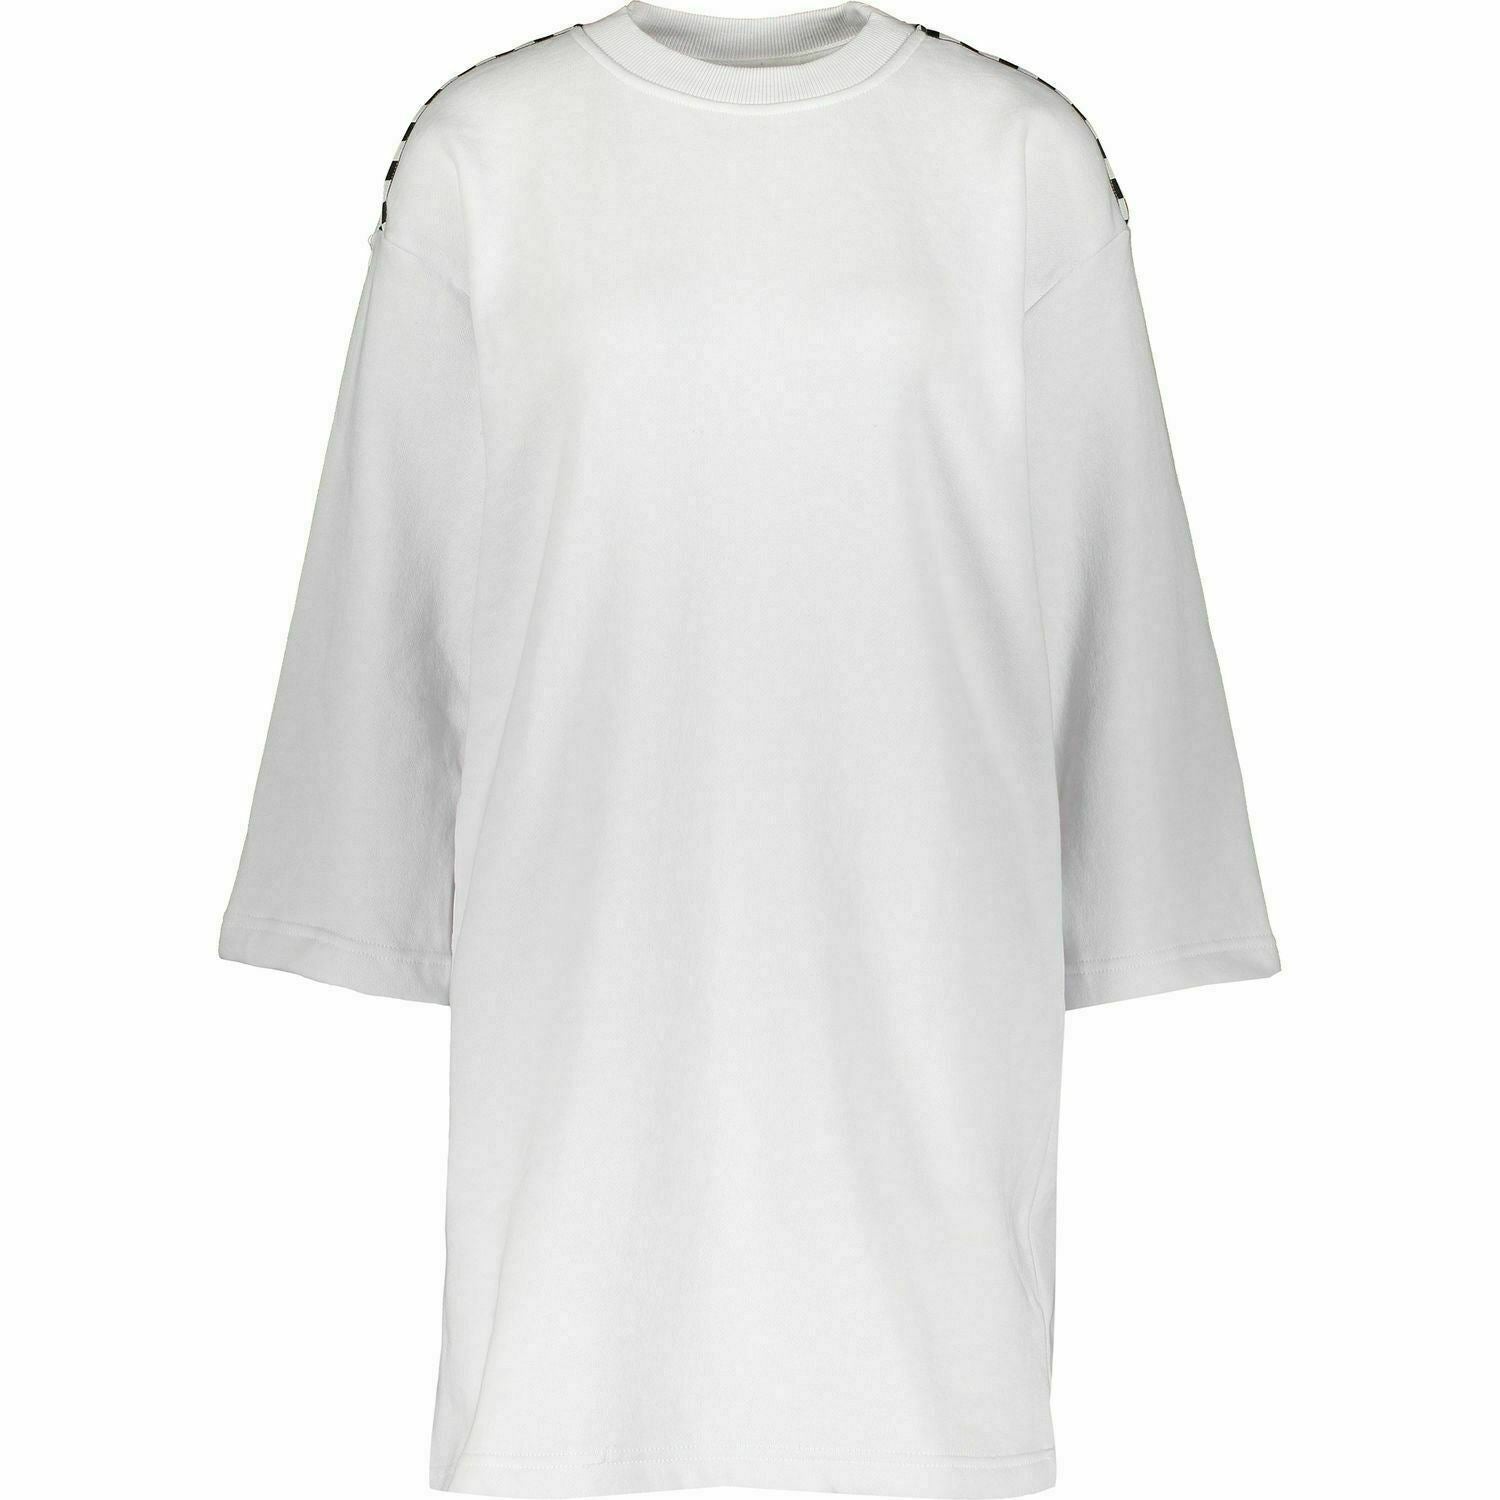 VANS Women's White Chromo Dress Longline Sweatshirt with checker Tape size XS